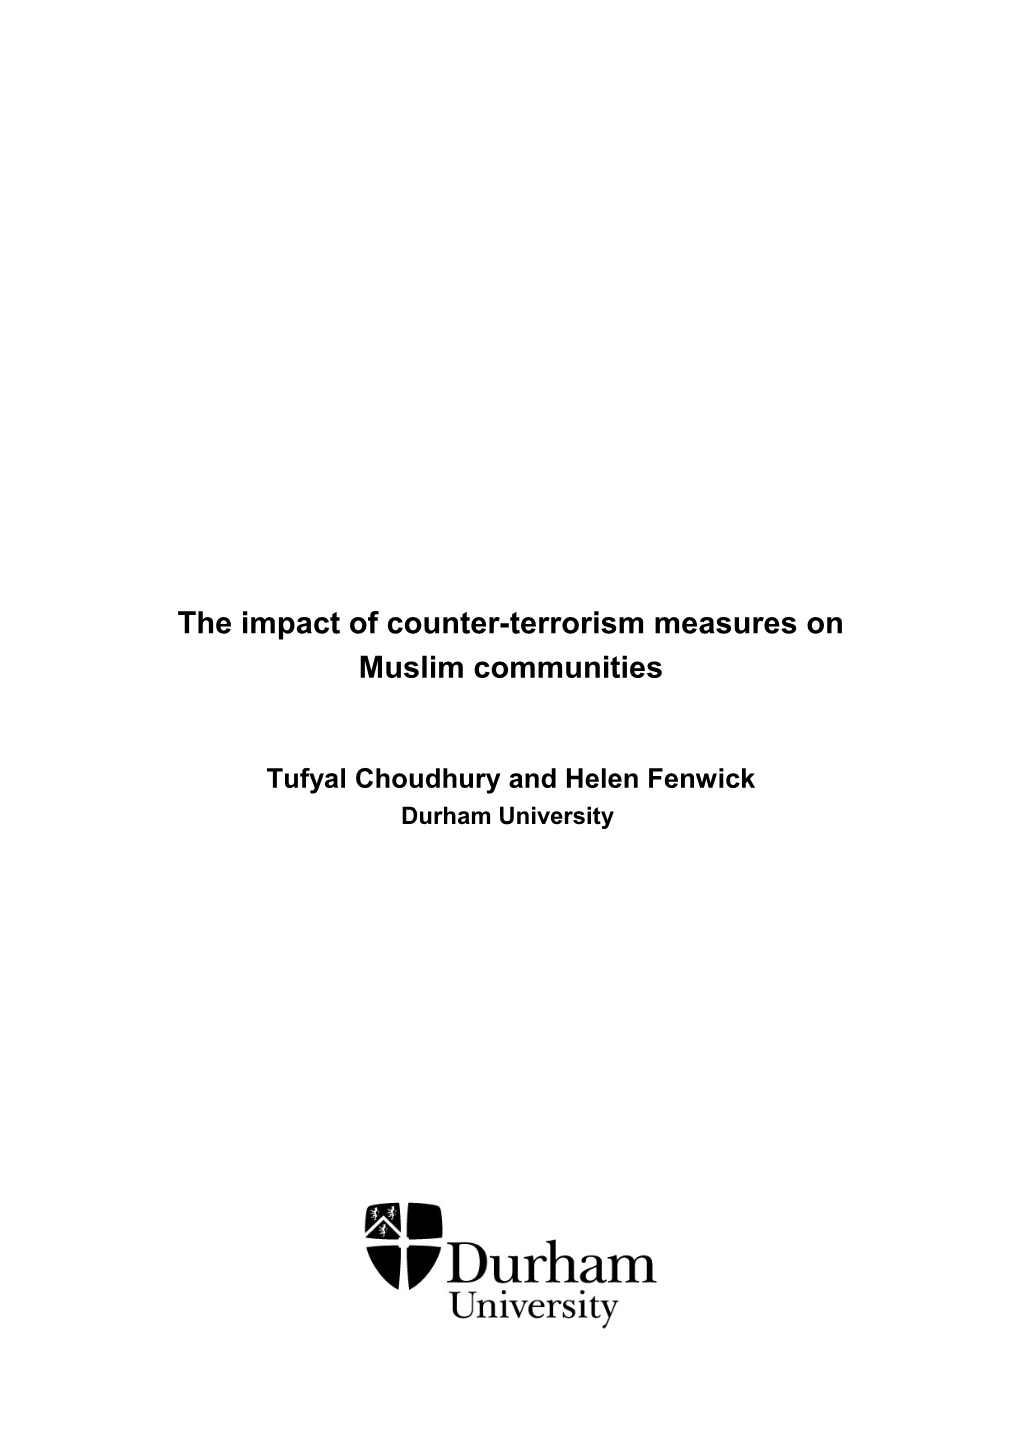 The Impact of Counter-Terrorism Measures on Muslim Communities